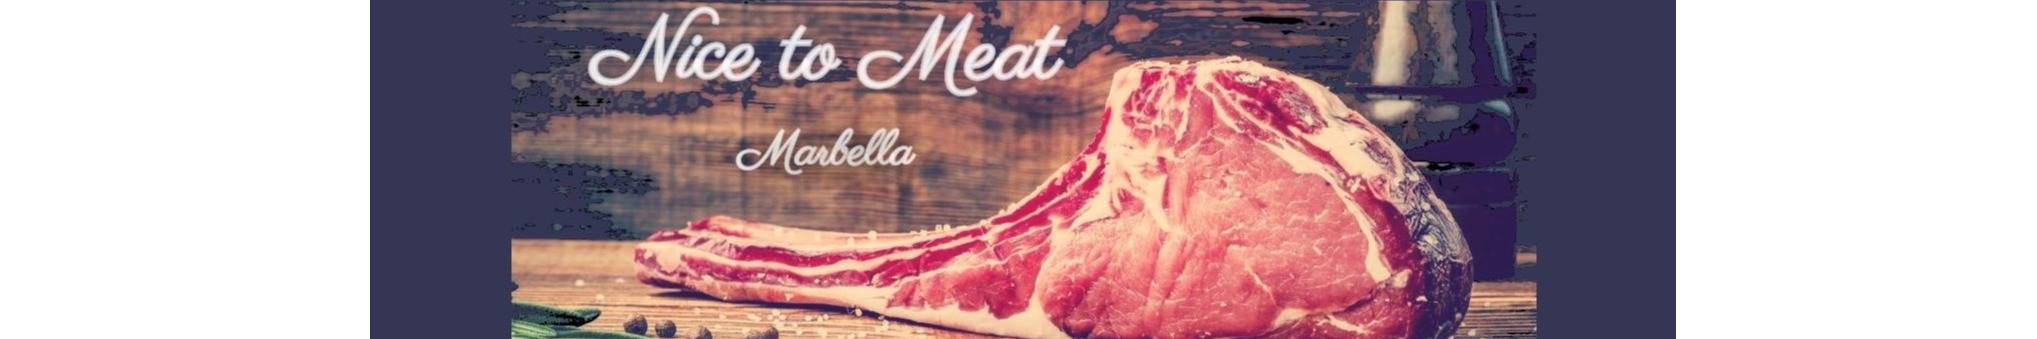 Online ordering platform for exceptional fresh meat 